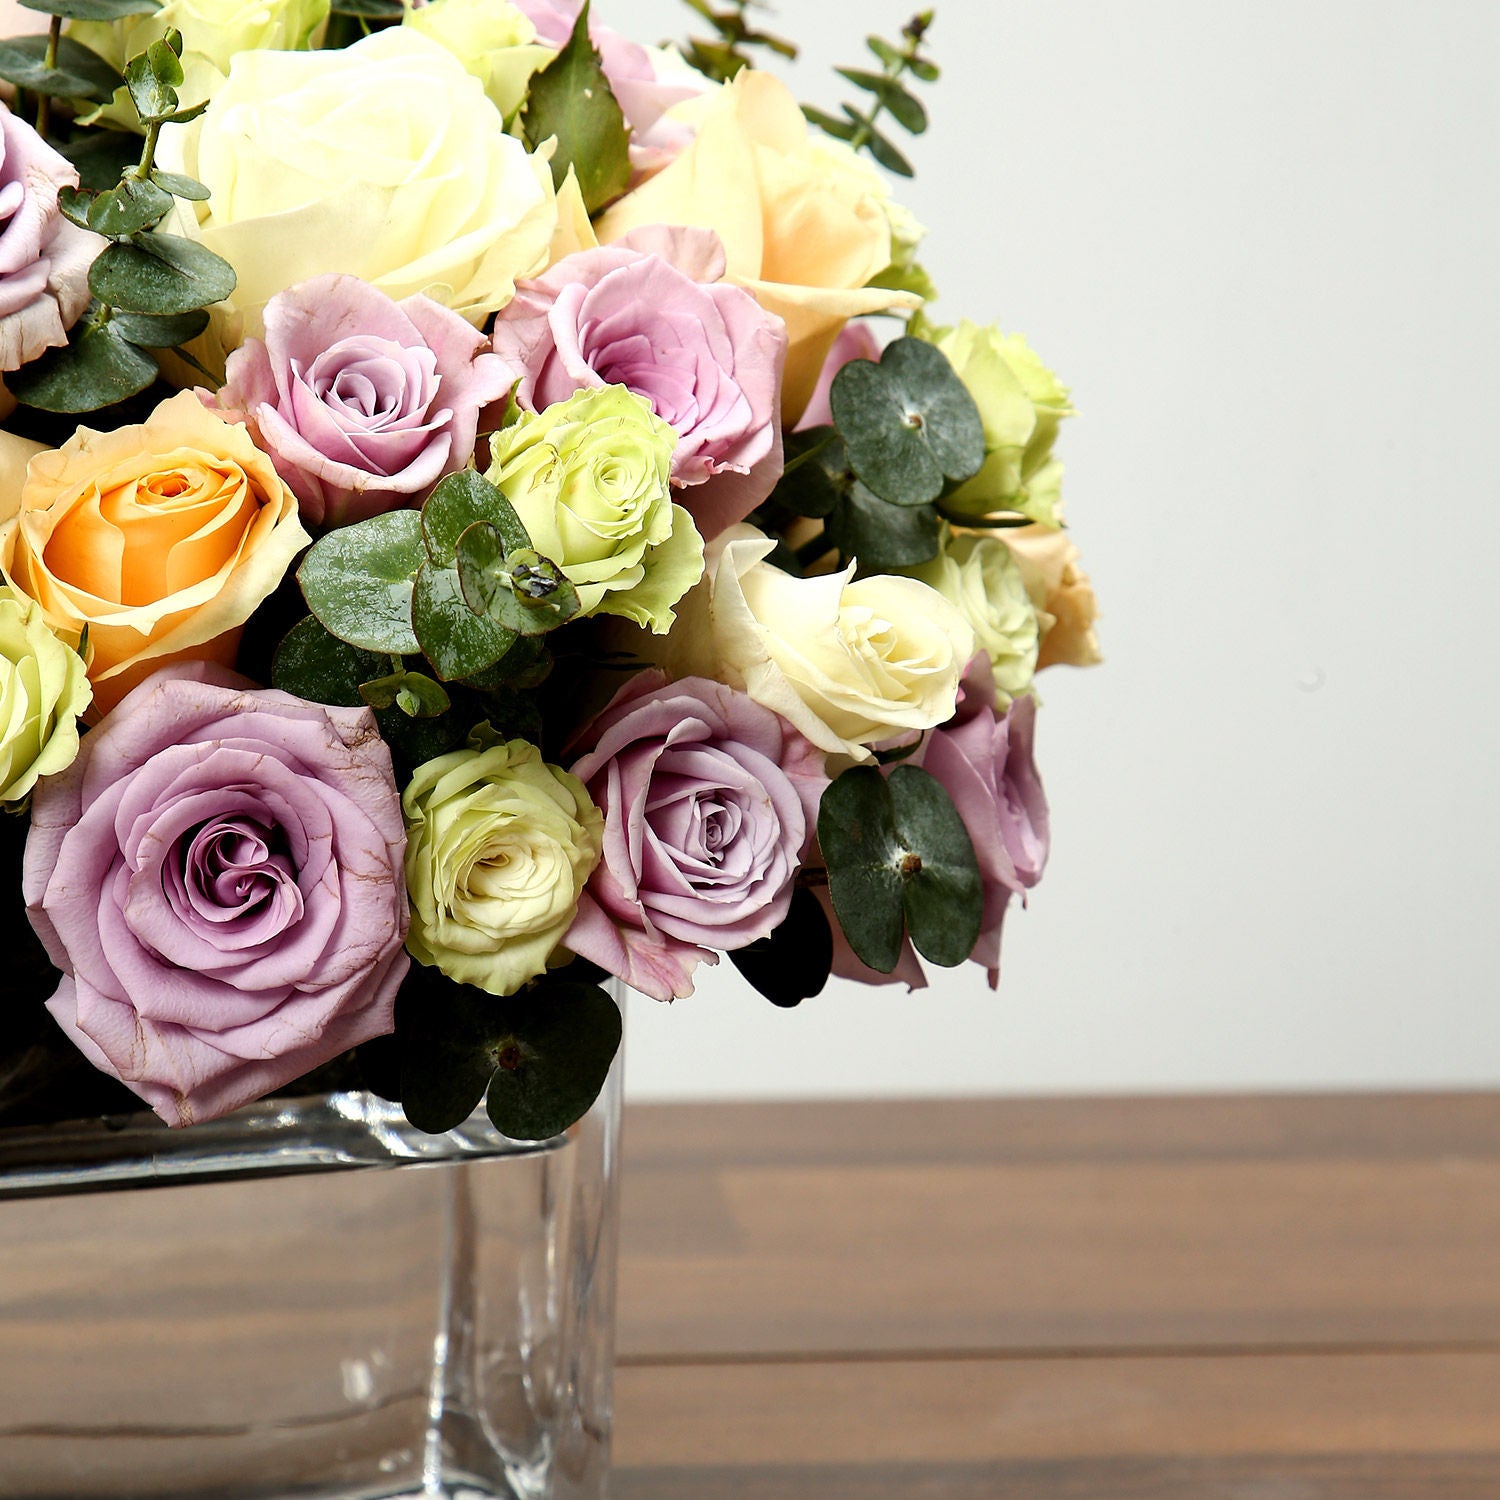 Mixed Rose Arrangement In Glass Vase